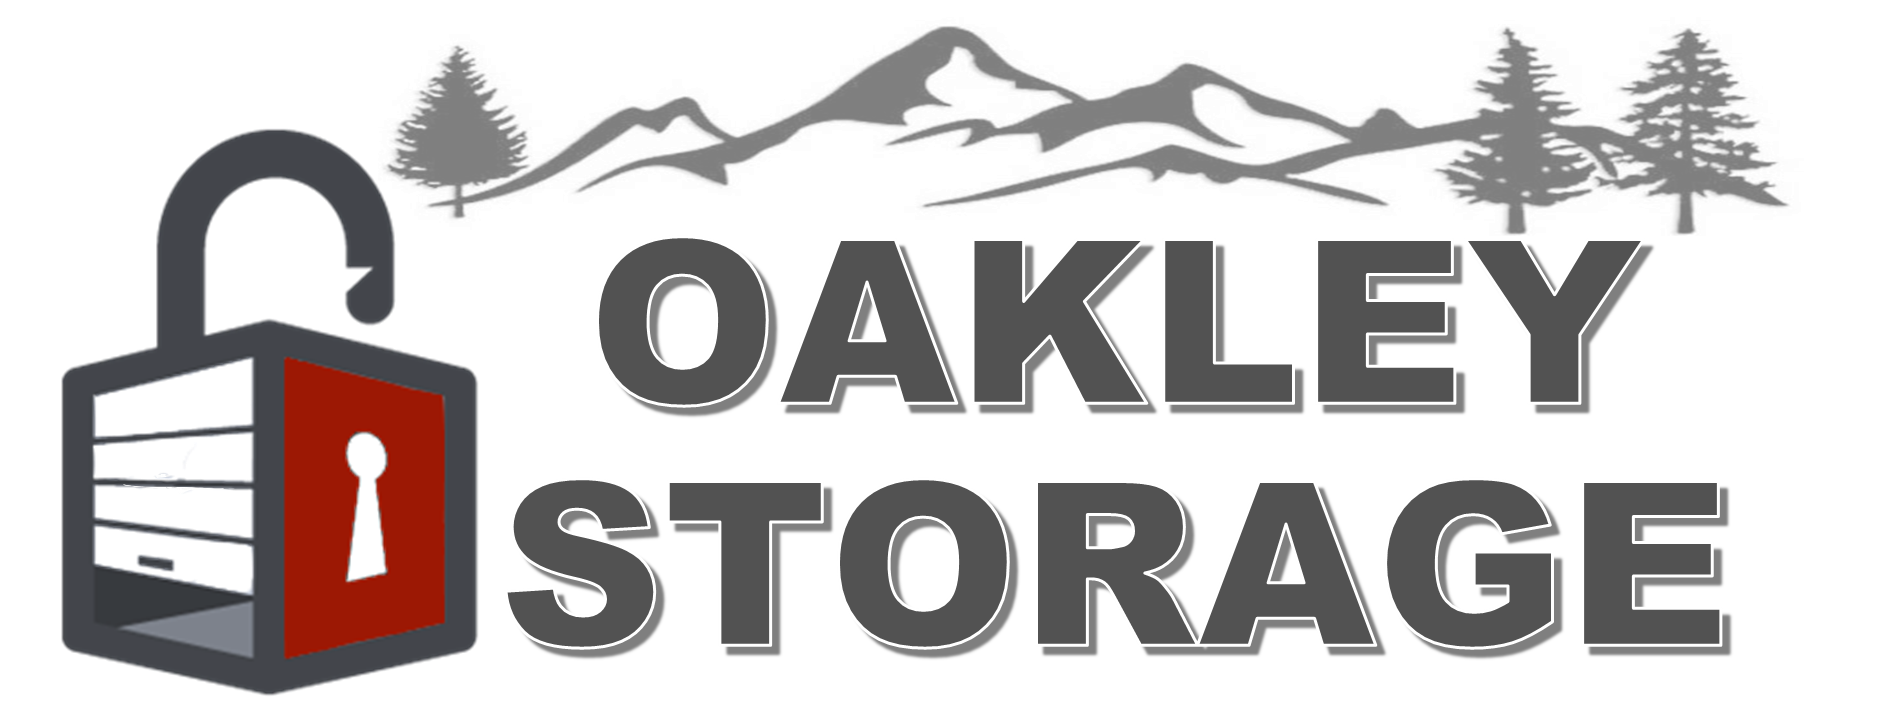 oakley storage logo